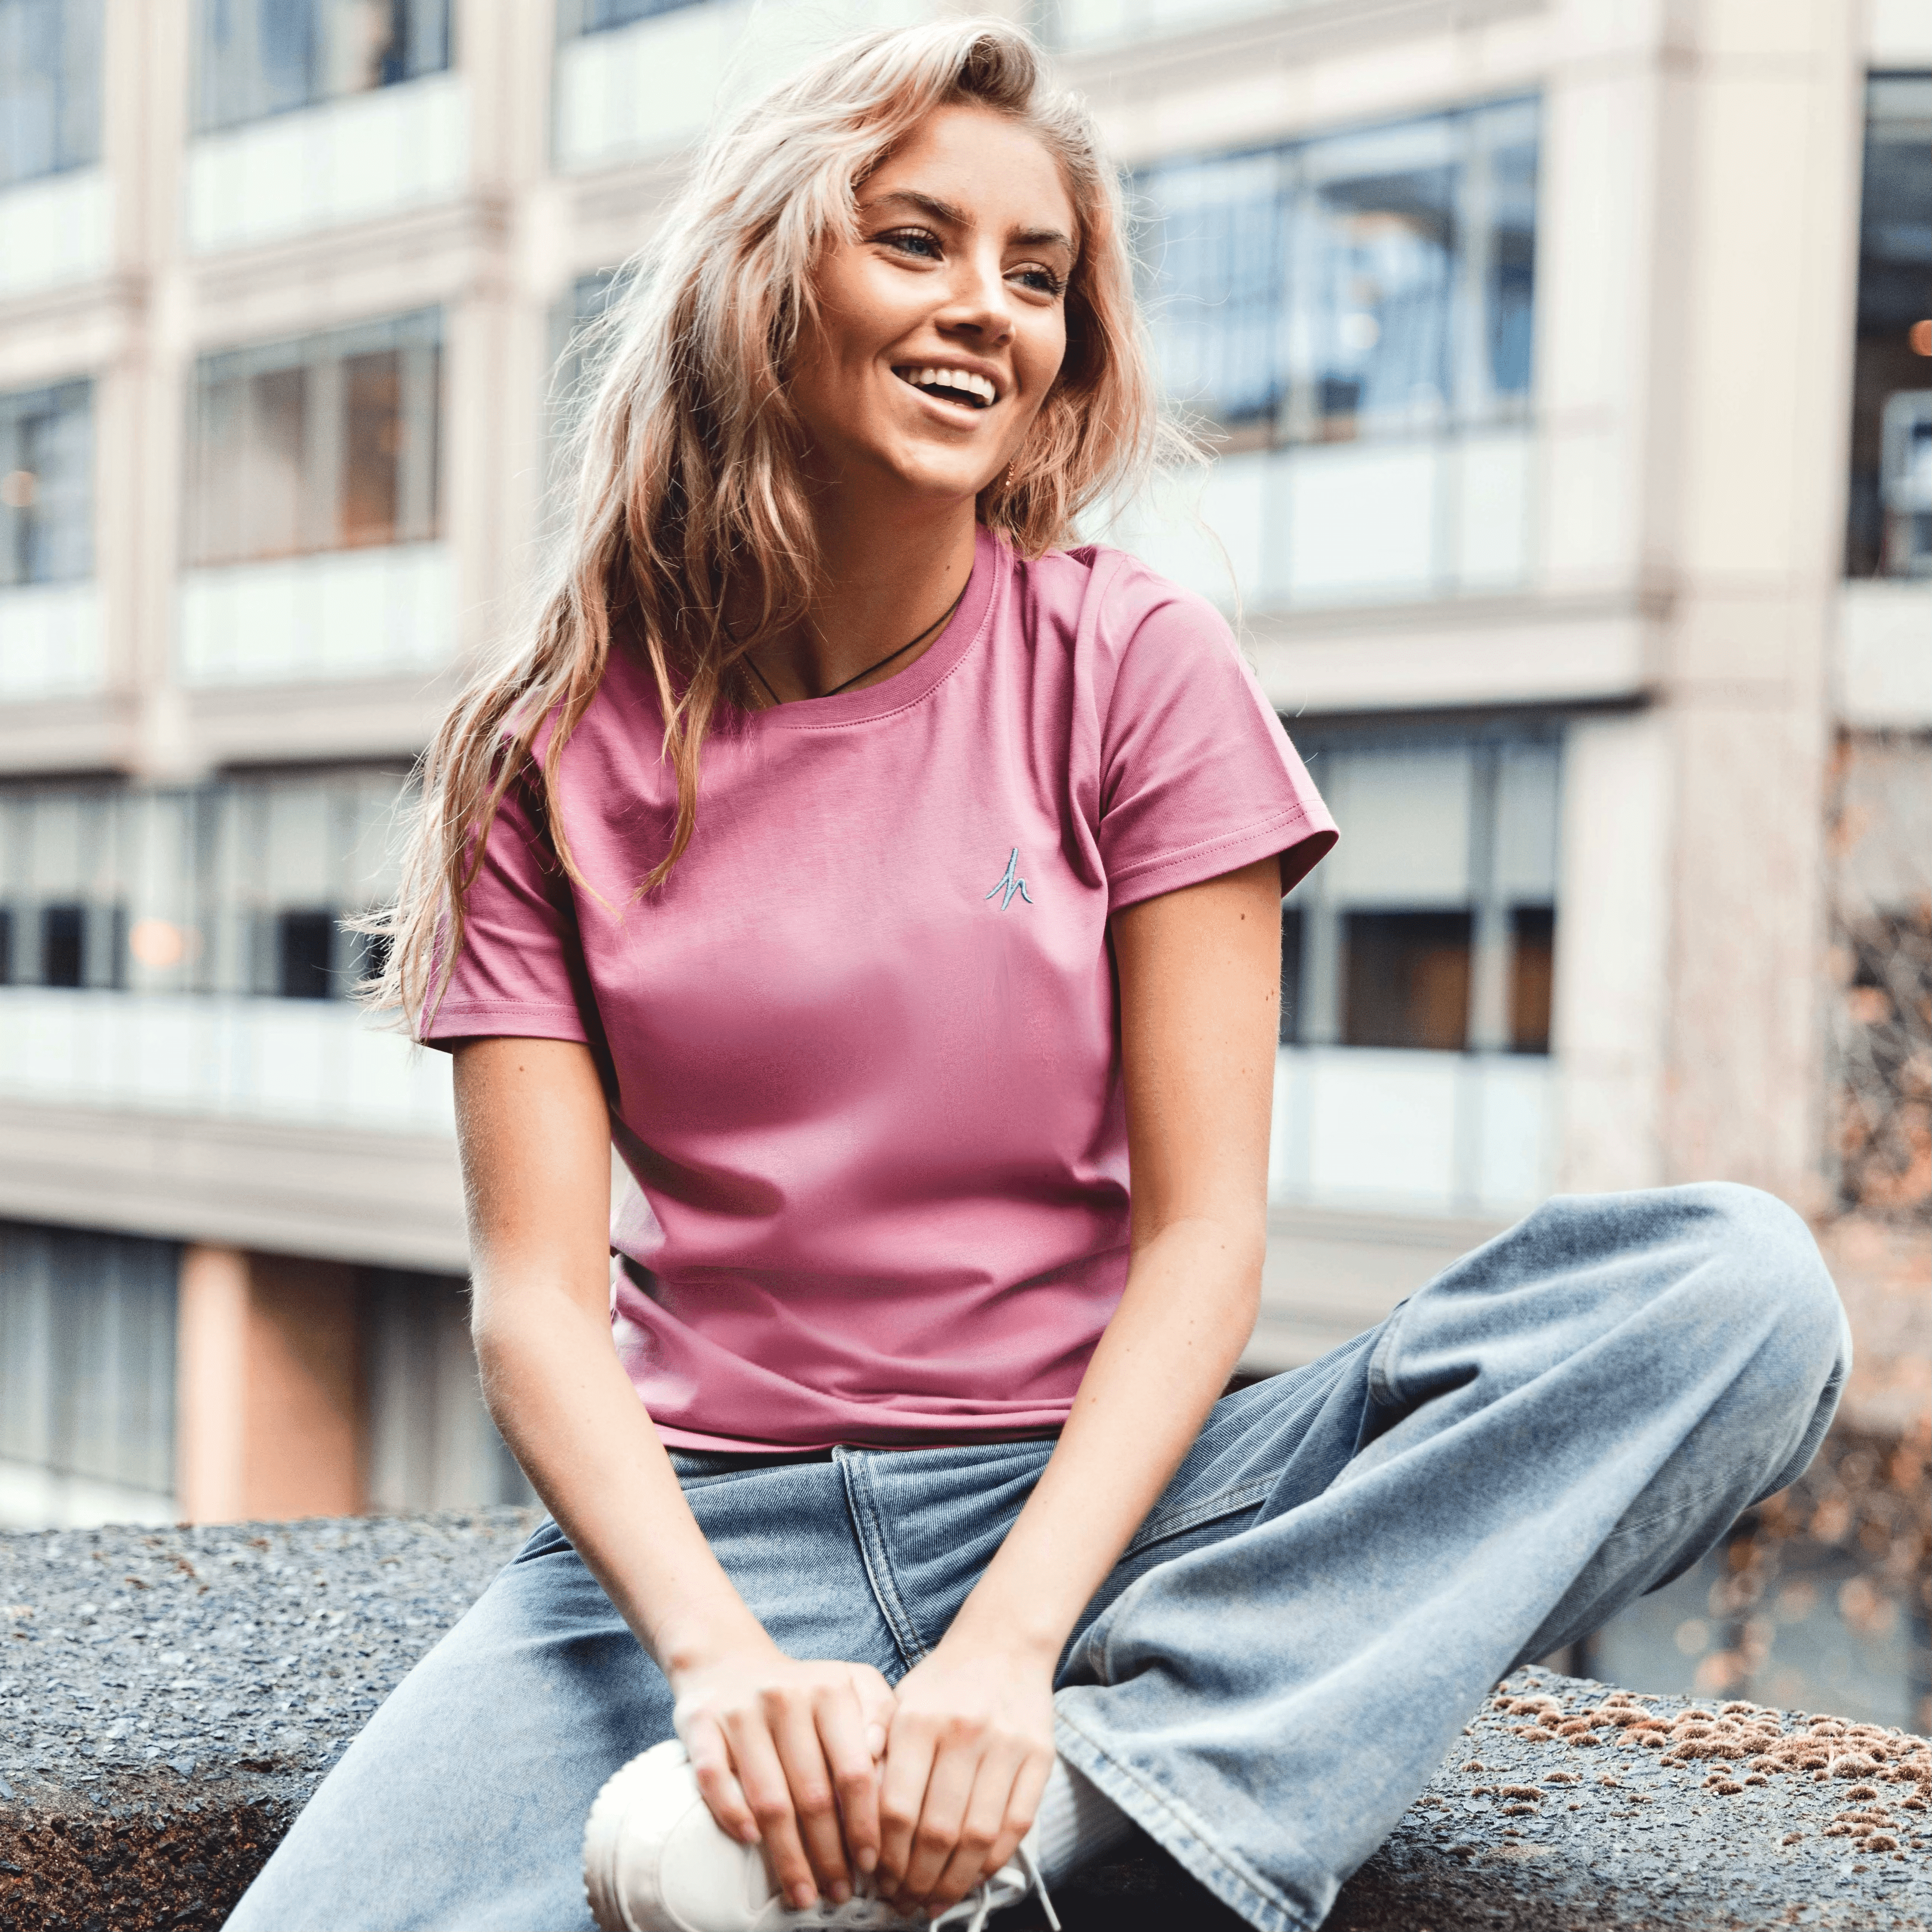 h clothing - female model sitting on ledge wearing pastel pink tshirt with blue h logo